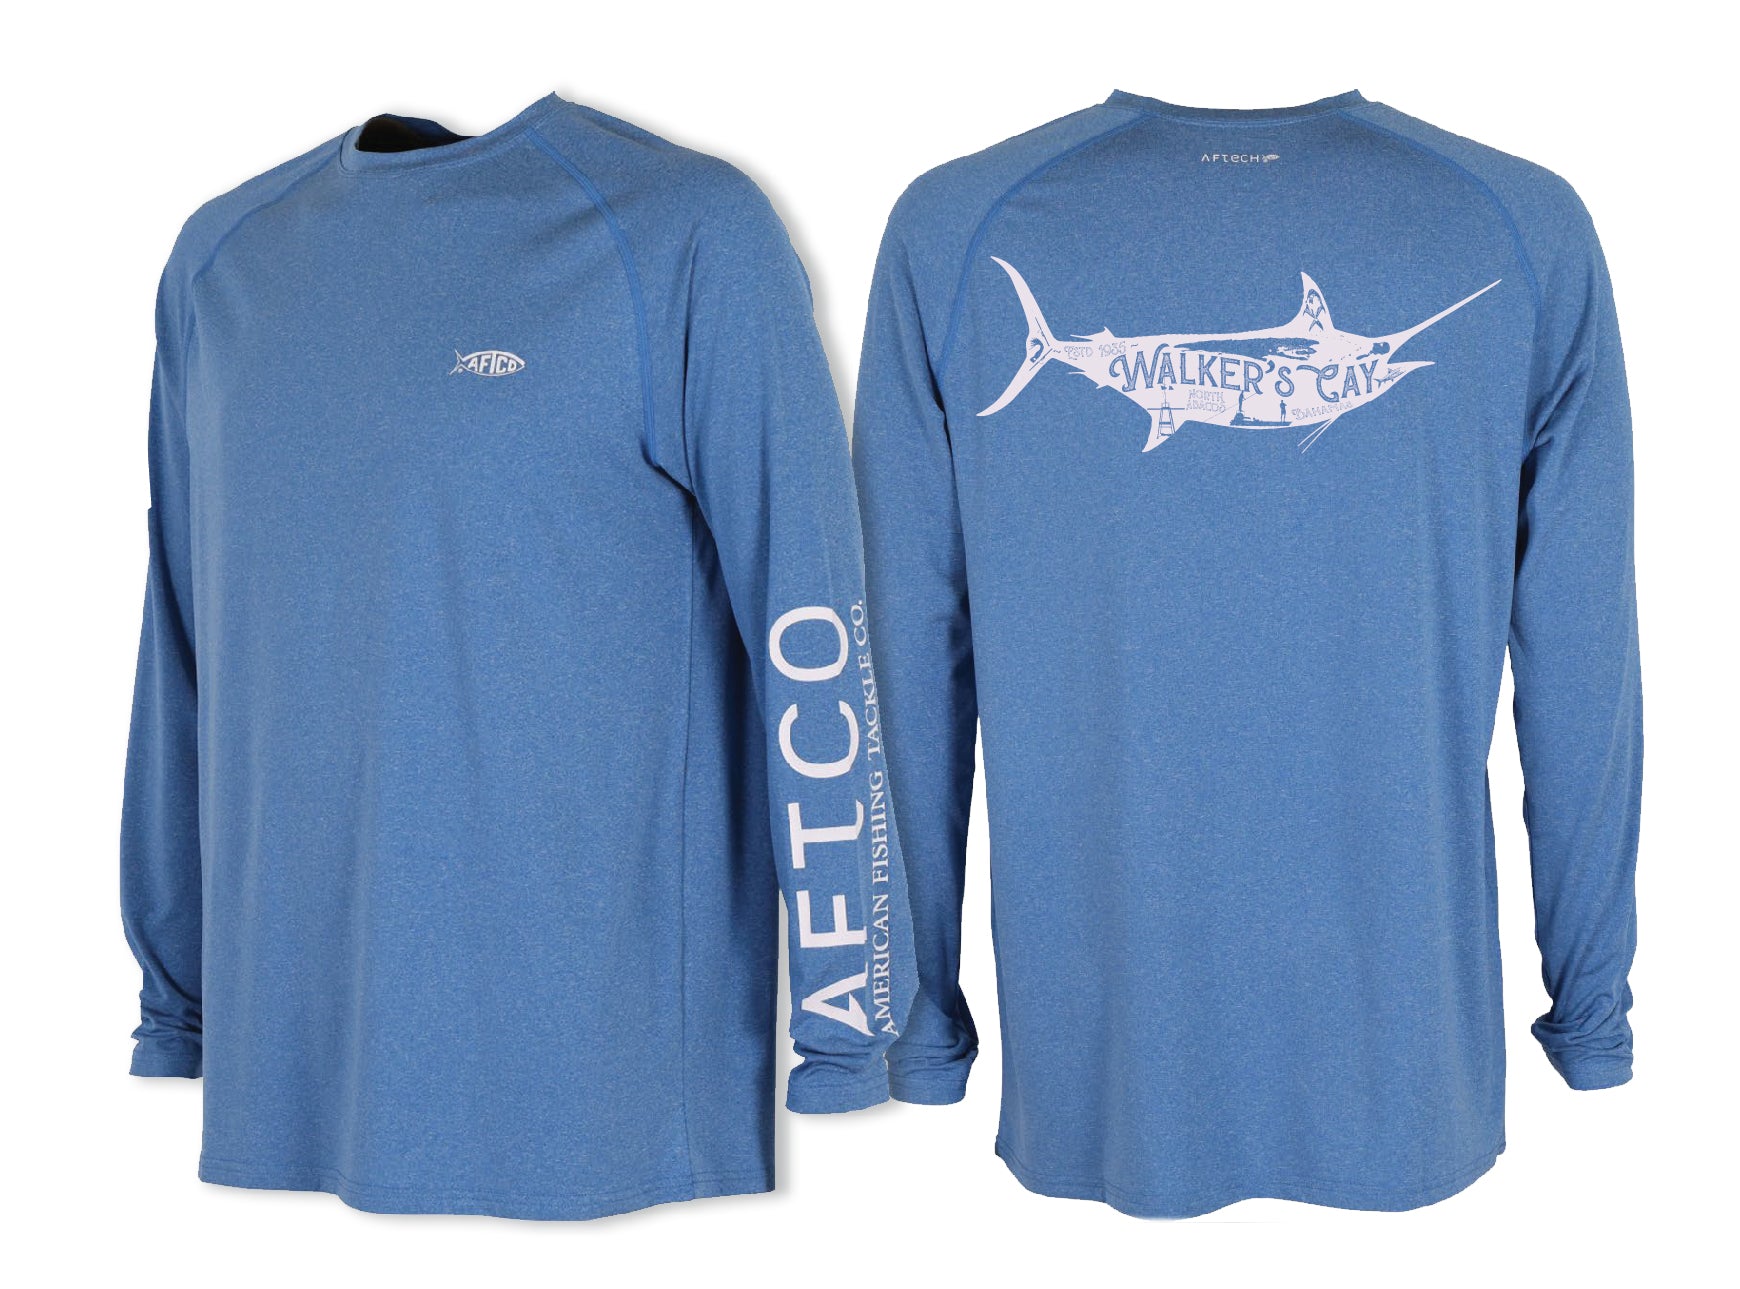 AFTCO Men's Sailfishing S/S T-Shirt - Light Blue - S